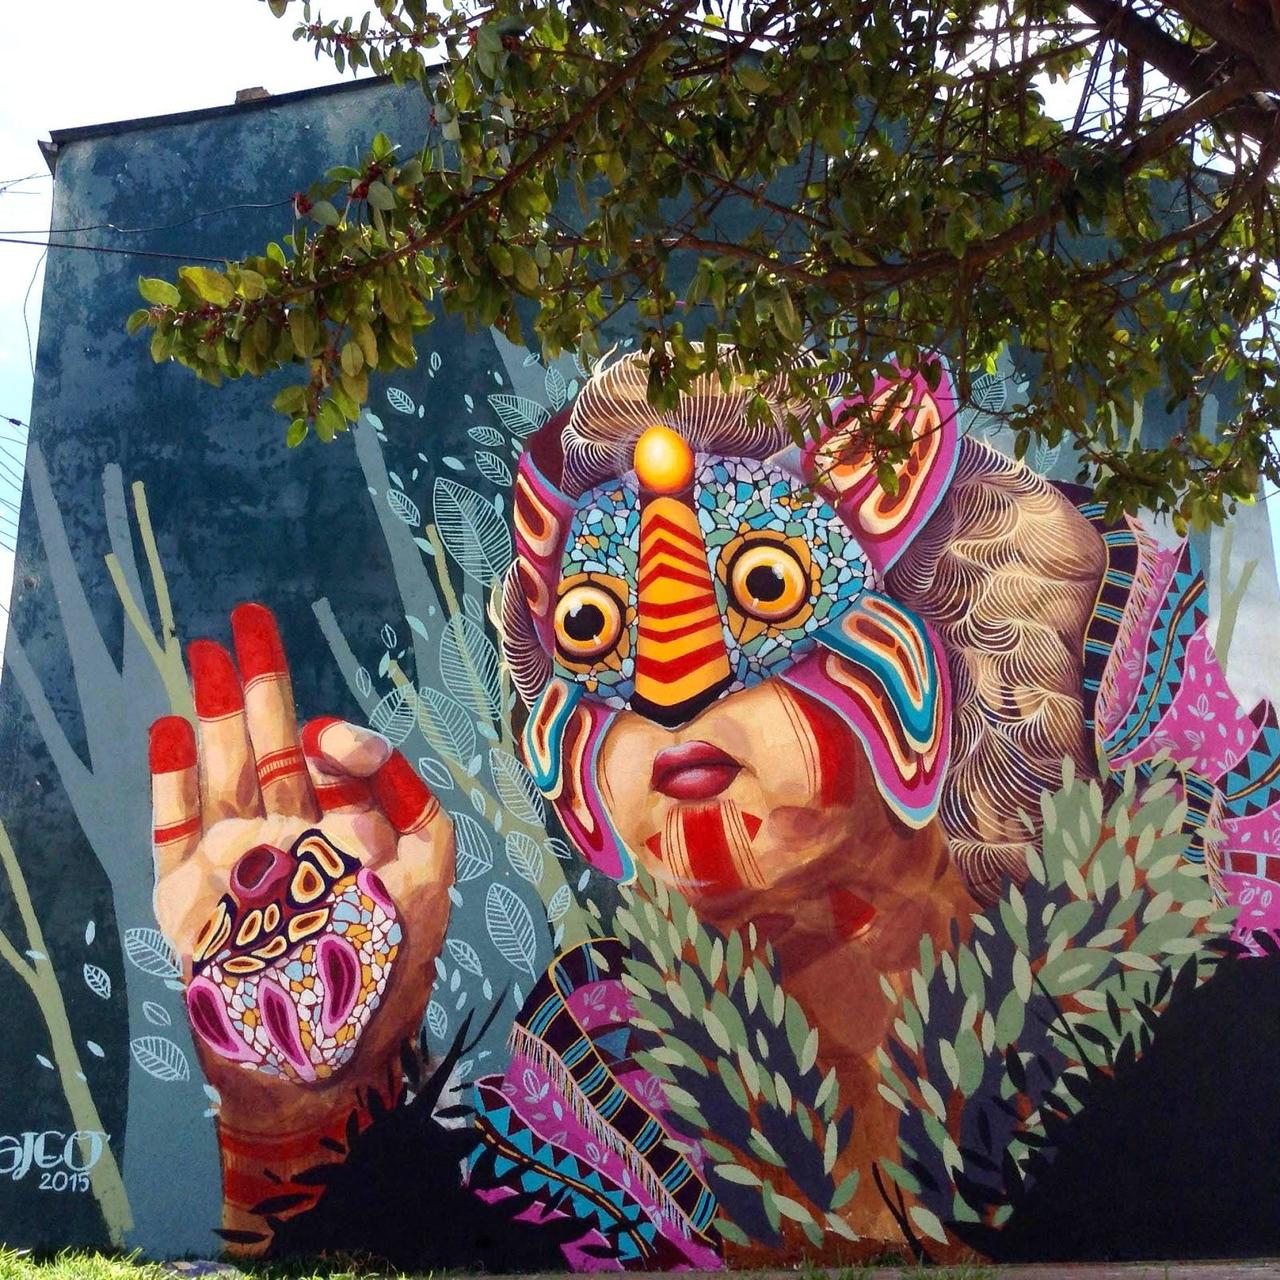 Gleo unveils 'A Contramano', a new mural in Bogota, Colombia. #StreetArt #Graffiti #Mural http://t.co/UdVXg07dBe